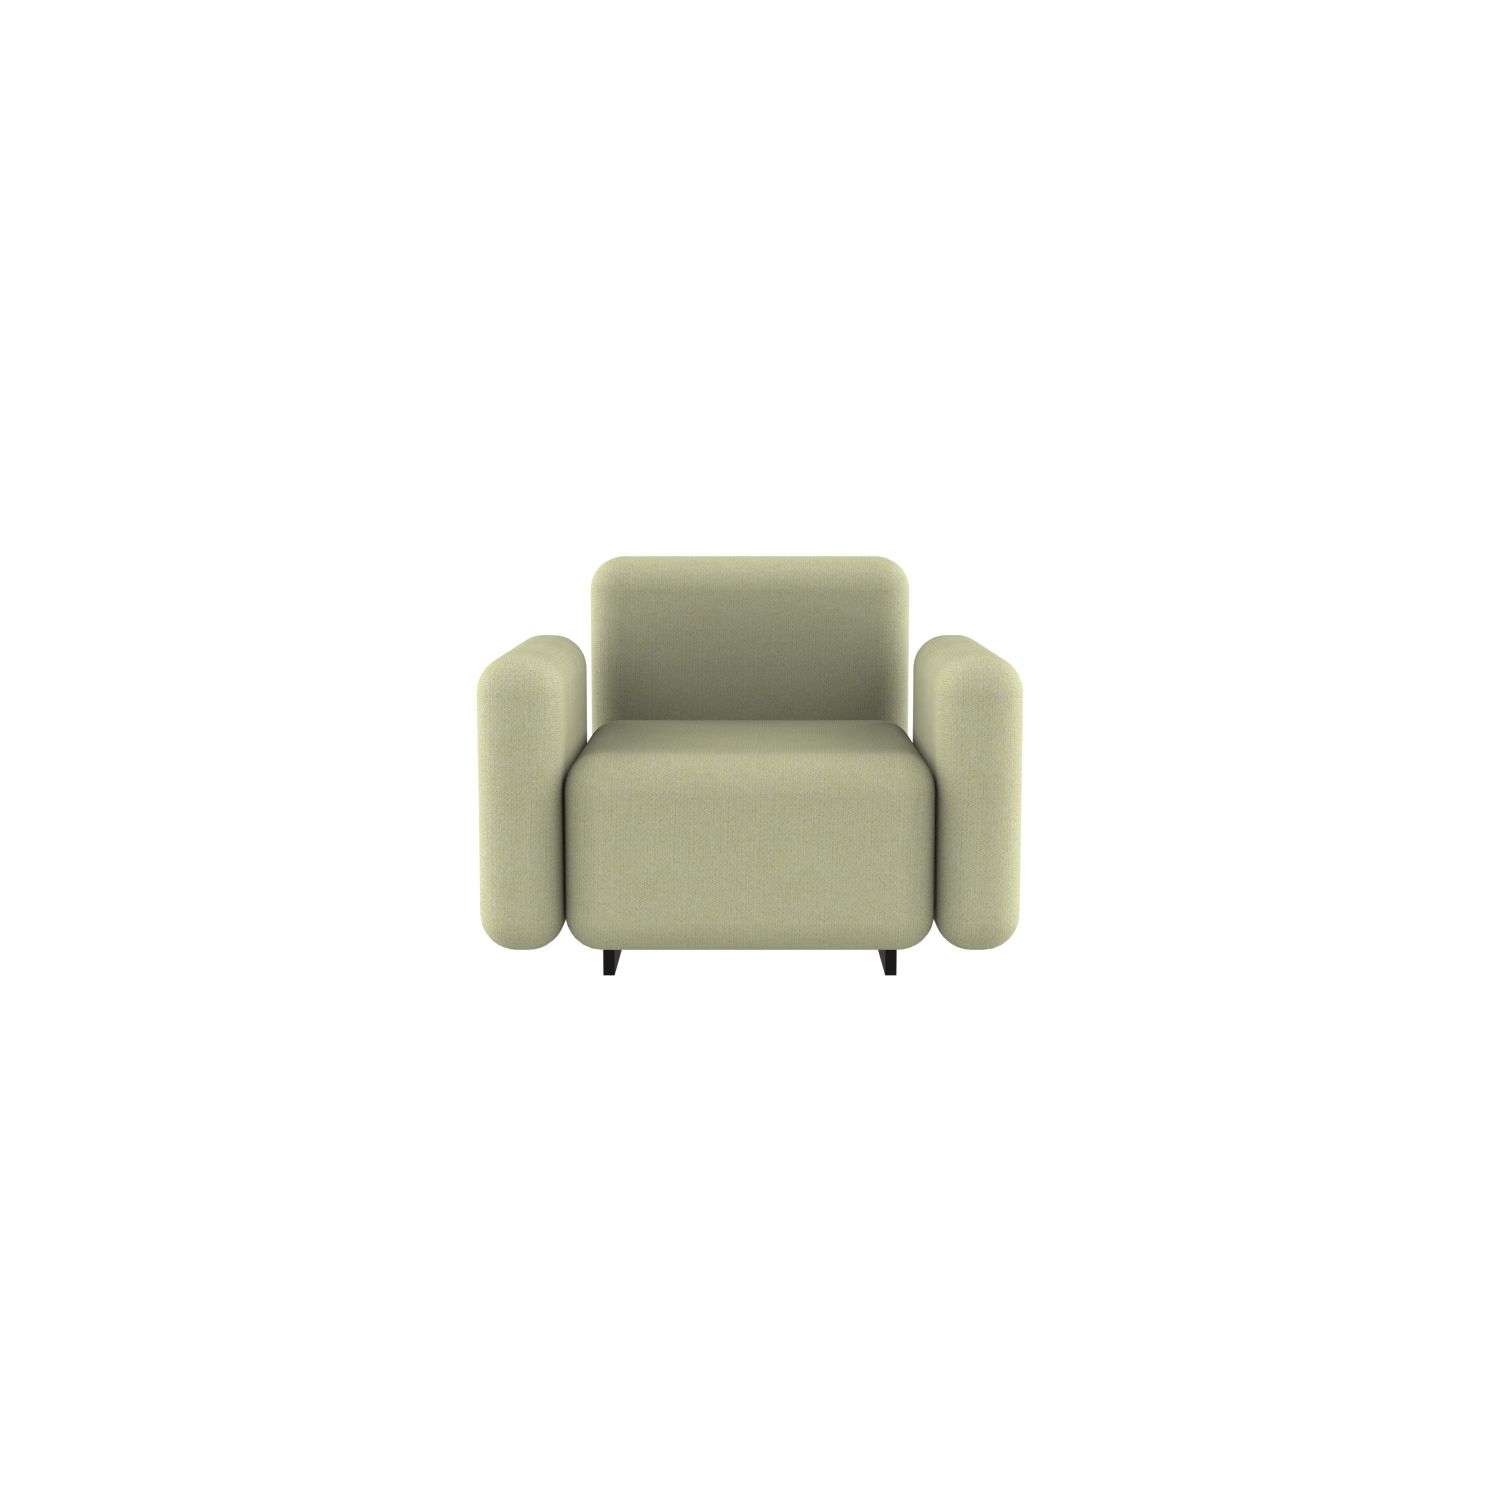 lensvelt fabio novembre balance armchair with armrest moss ivory 30 black ral9005